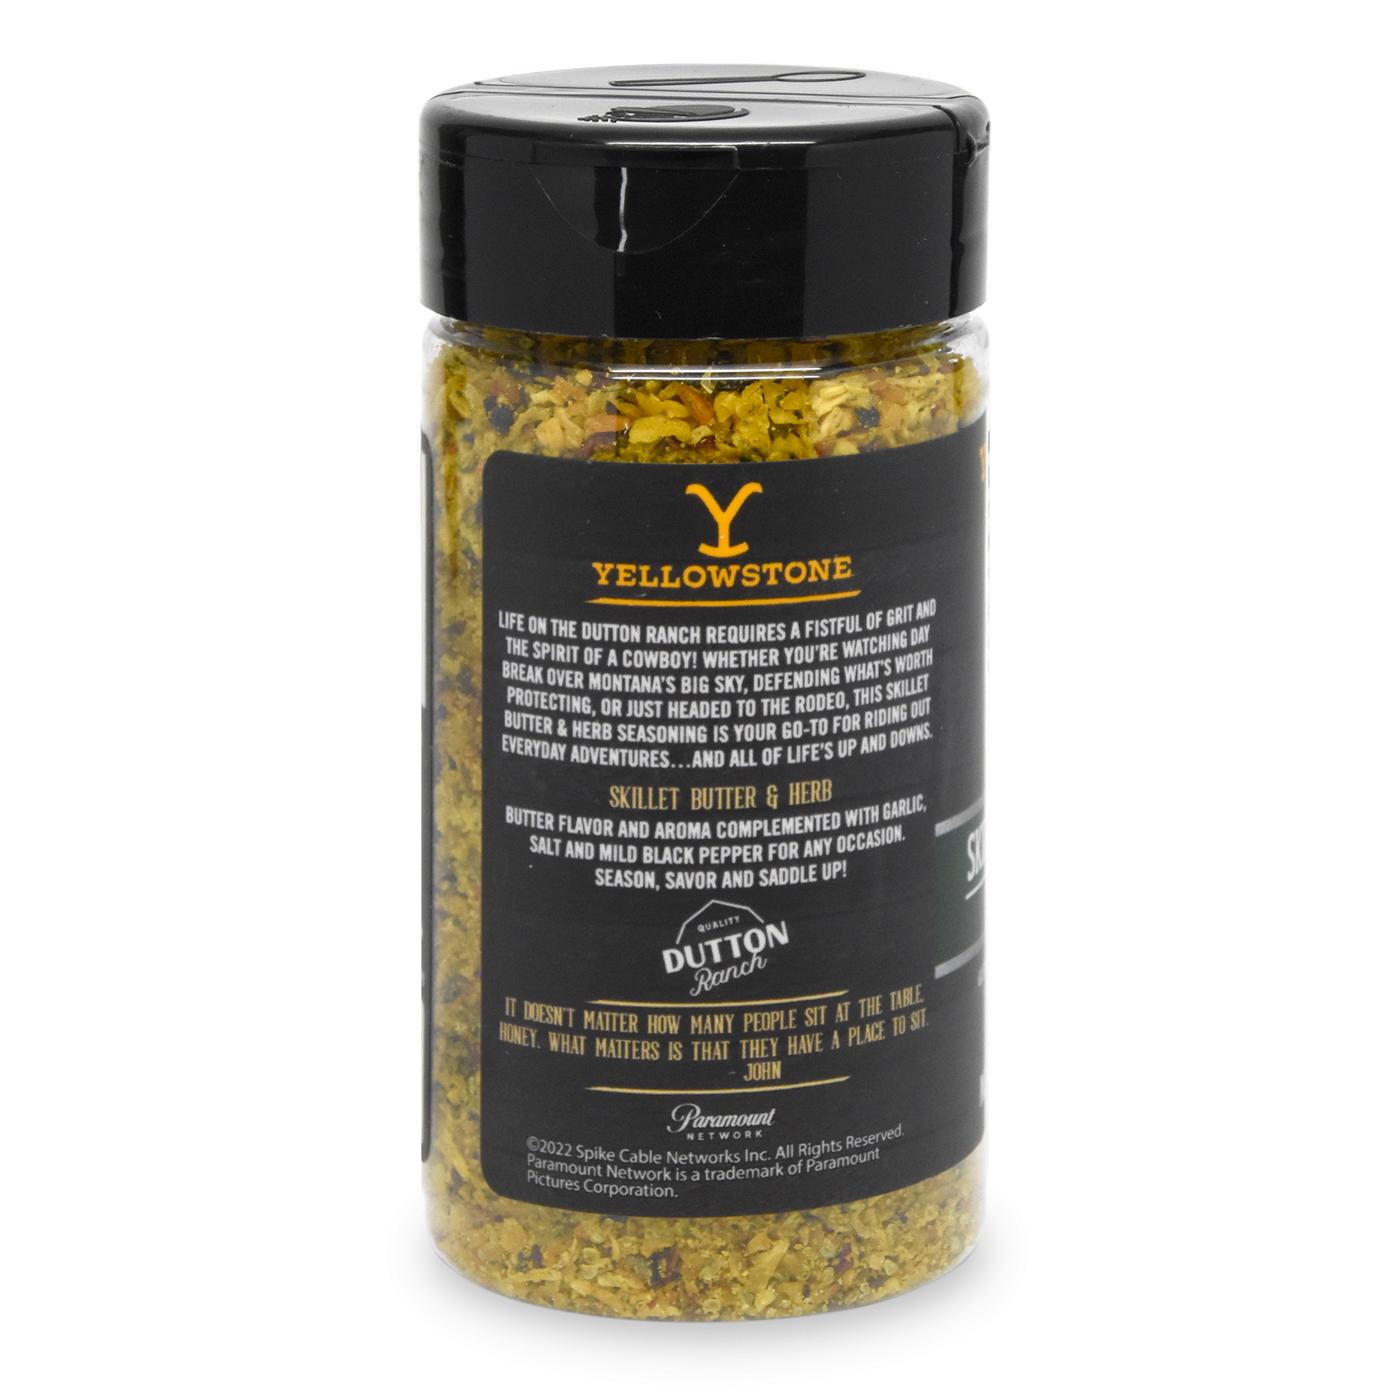 Yellowstone Skillet Butter & Herb Seasoning & Rub; image 2 of 2